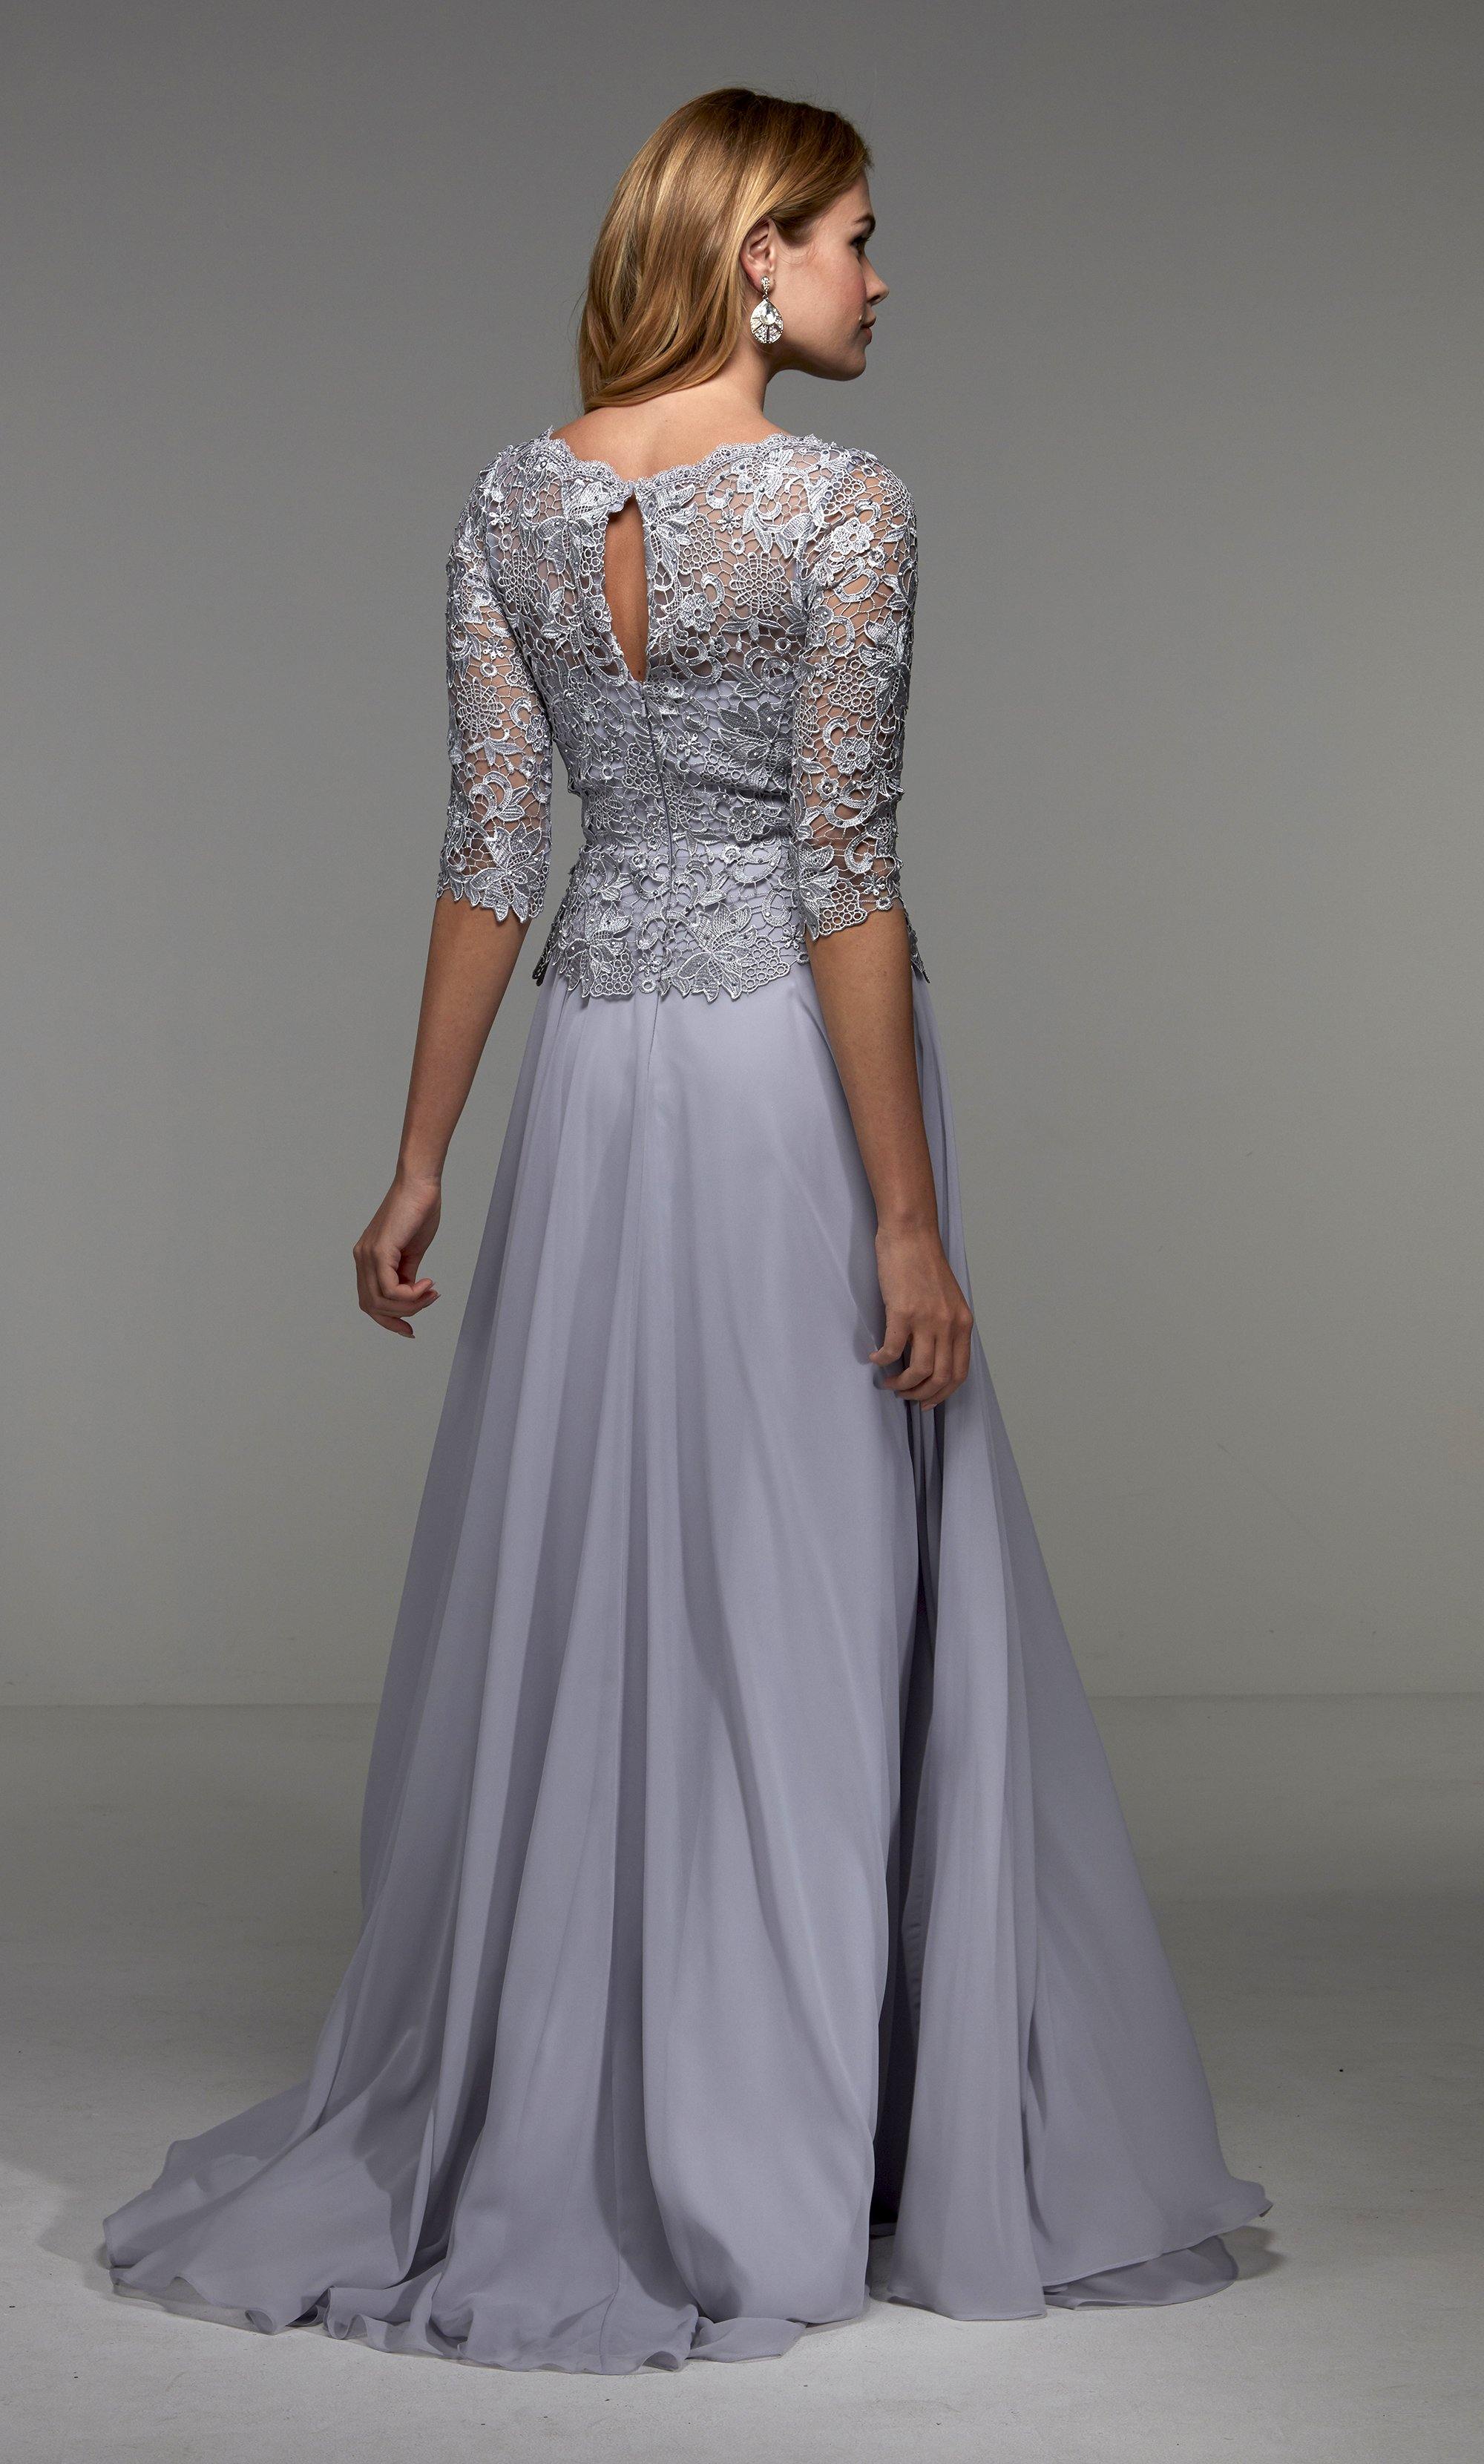 Formal Dress: 27470. Long Formal Dress, Illusion Neckline, Flowy Alyce Paris